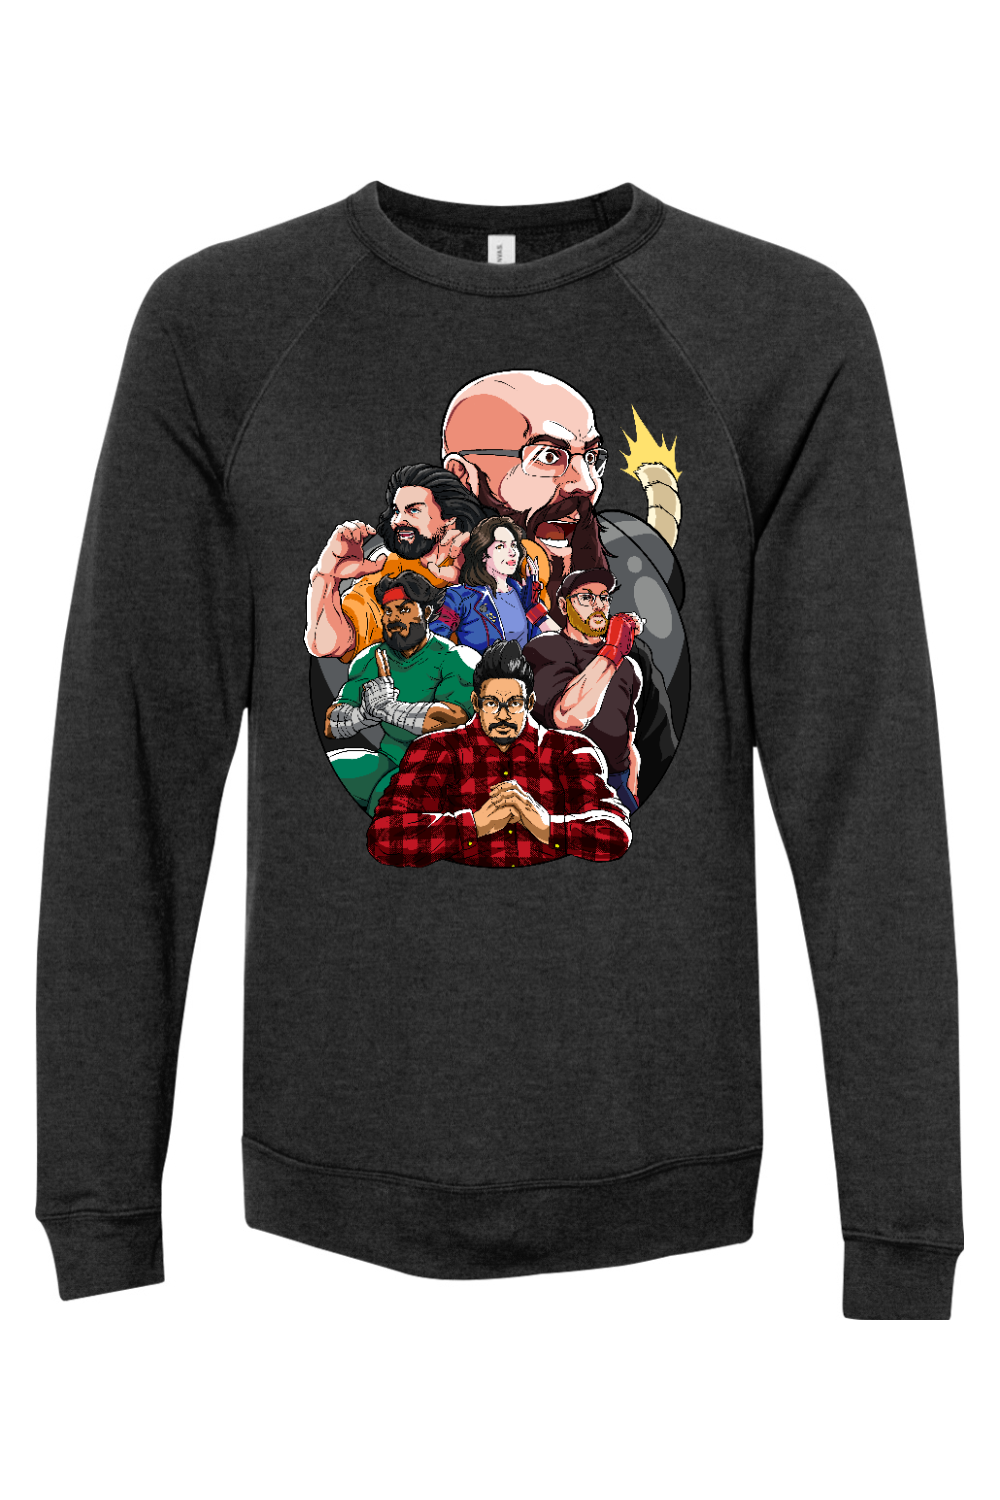 Assemble! (now a sweatshirt)